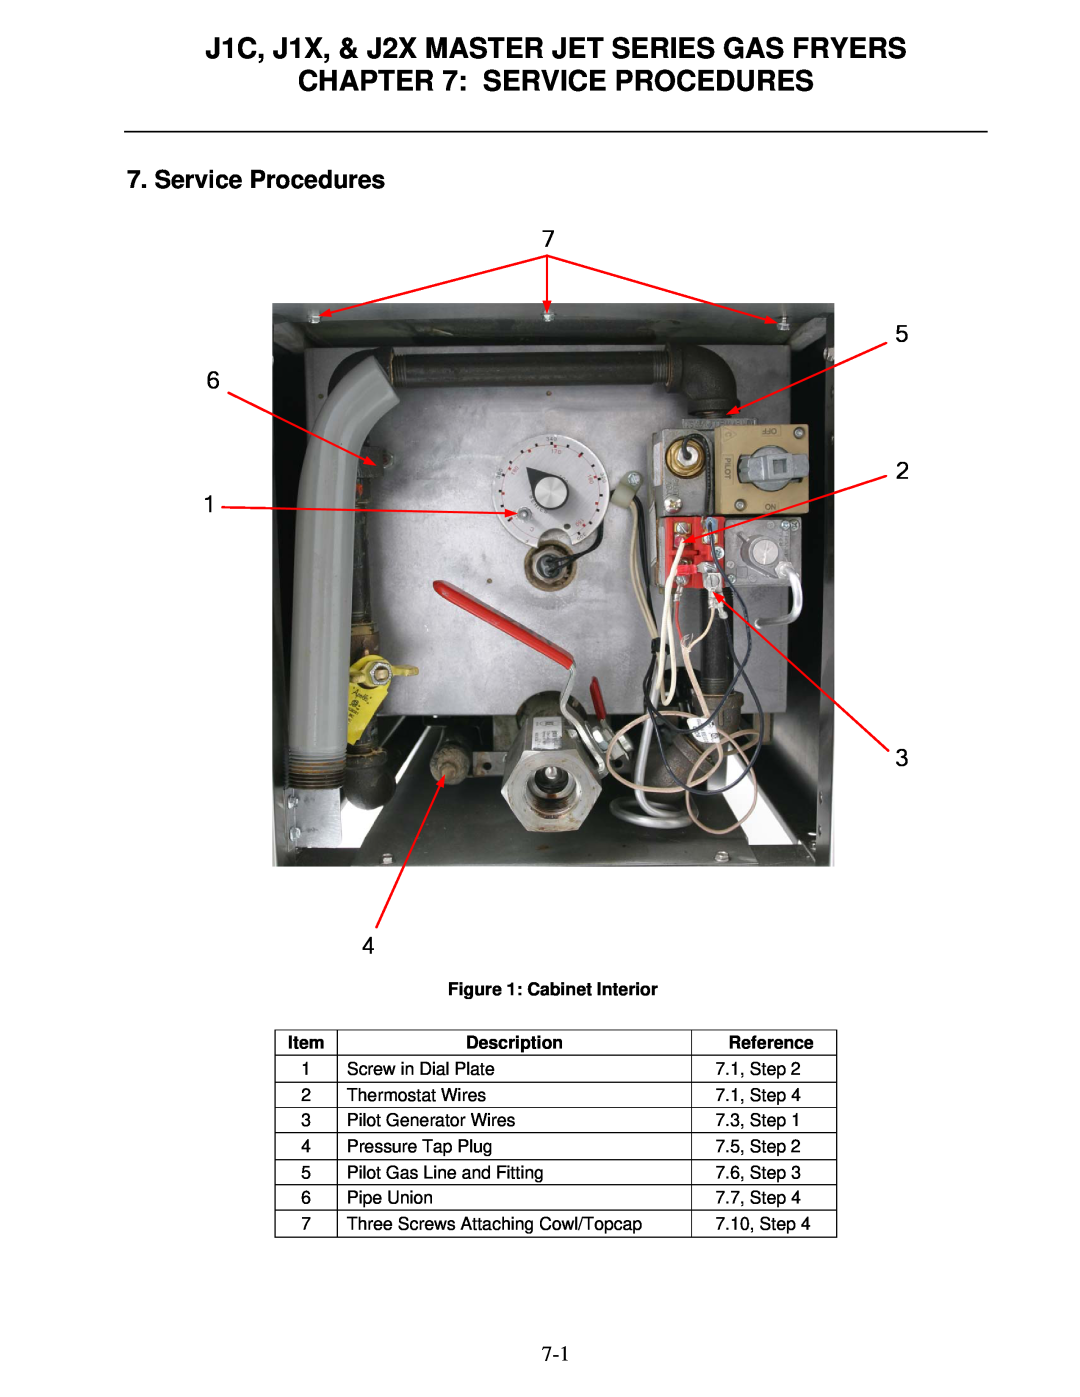 Frymaster Service Procedures, J1C, J1X, & J2X MASTER JET SERIES GAS FRYERS, Cabinet Interior, Description, Reference 